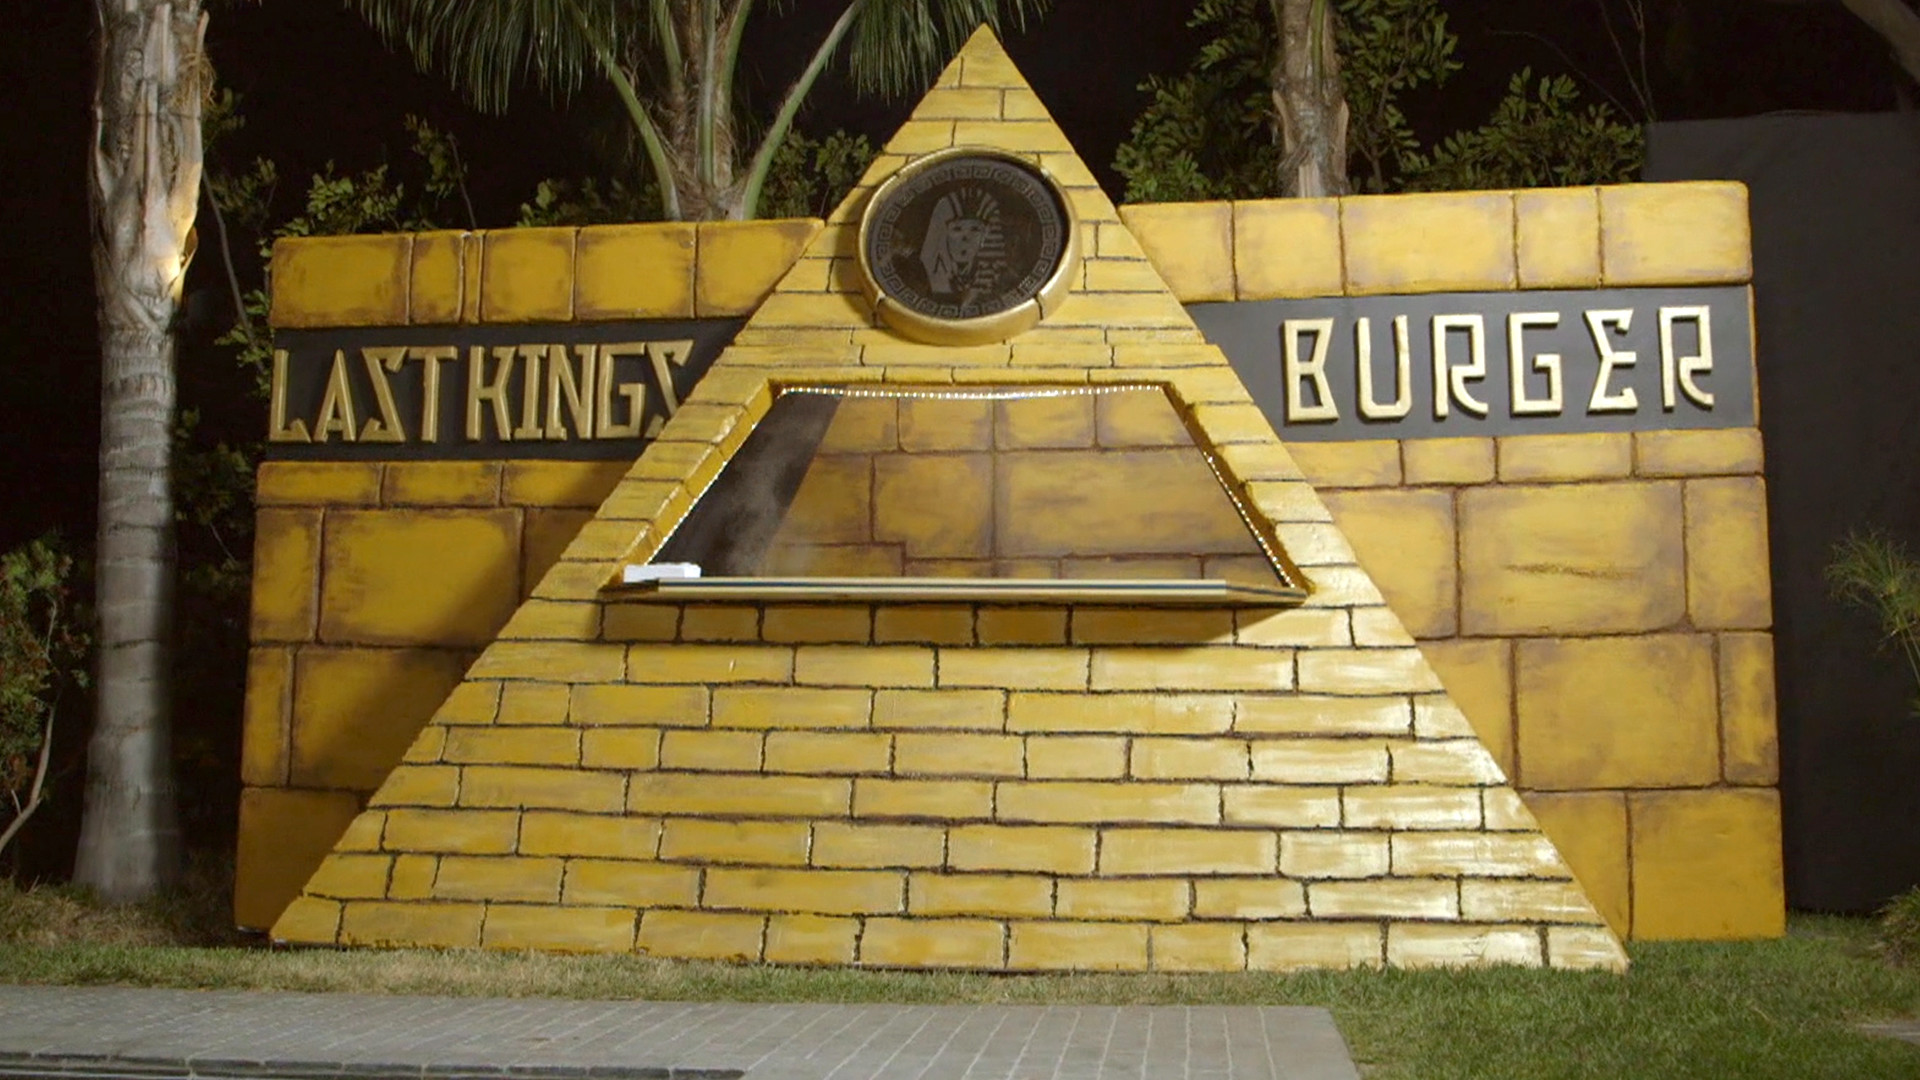 1920x1080 Kingin' with Tyga - Season 2, Ep. 5 - Last Kings Burger - Full Episode | MTV